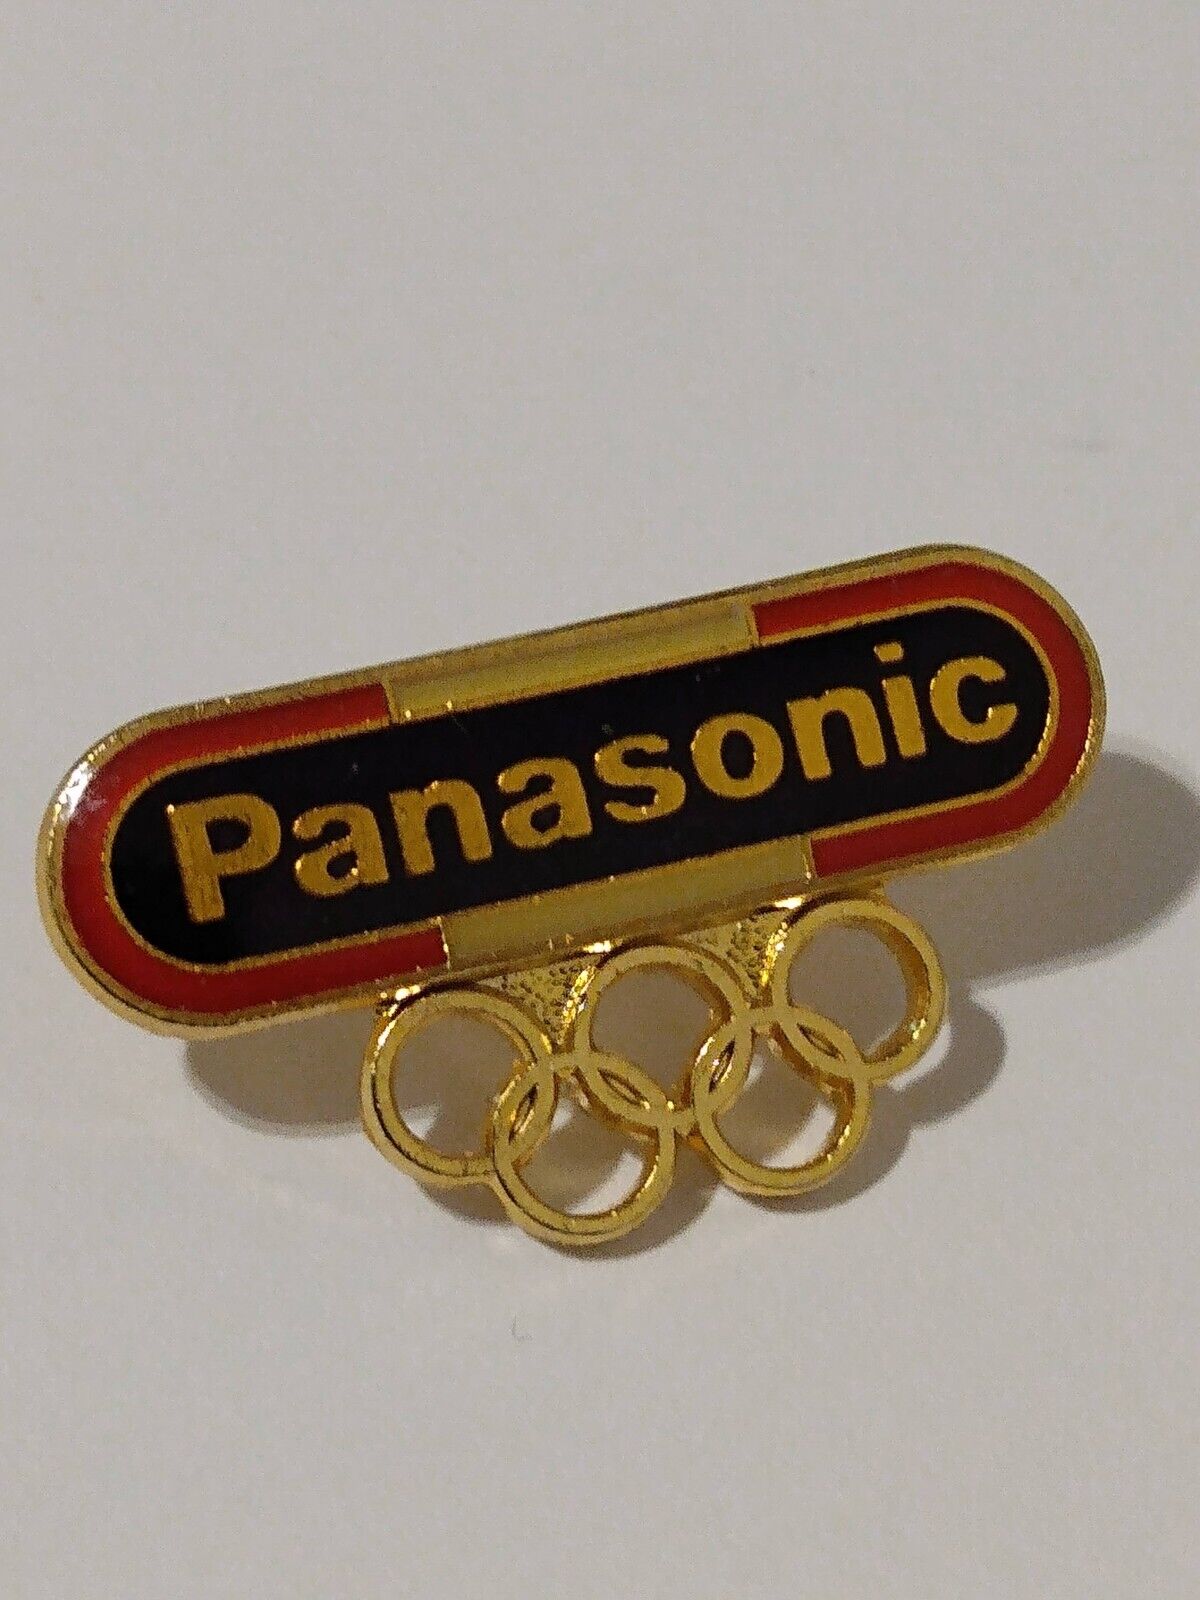 Panasonic Sponsored Olympics Lapel Pin